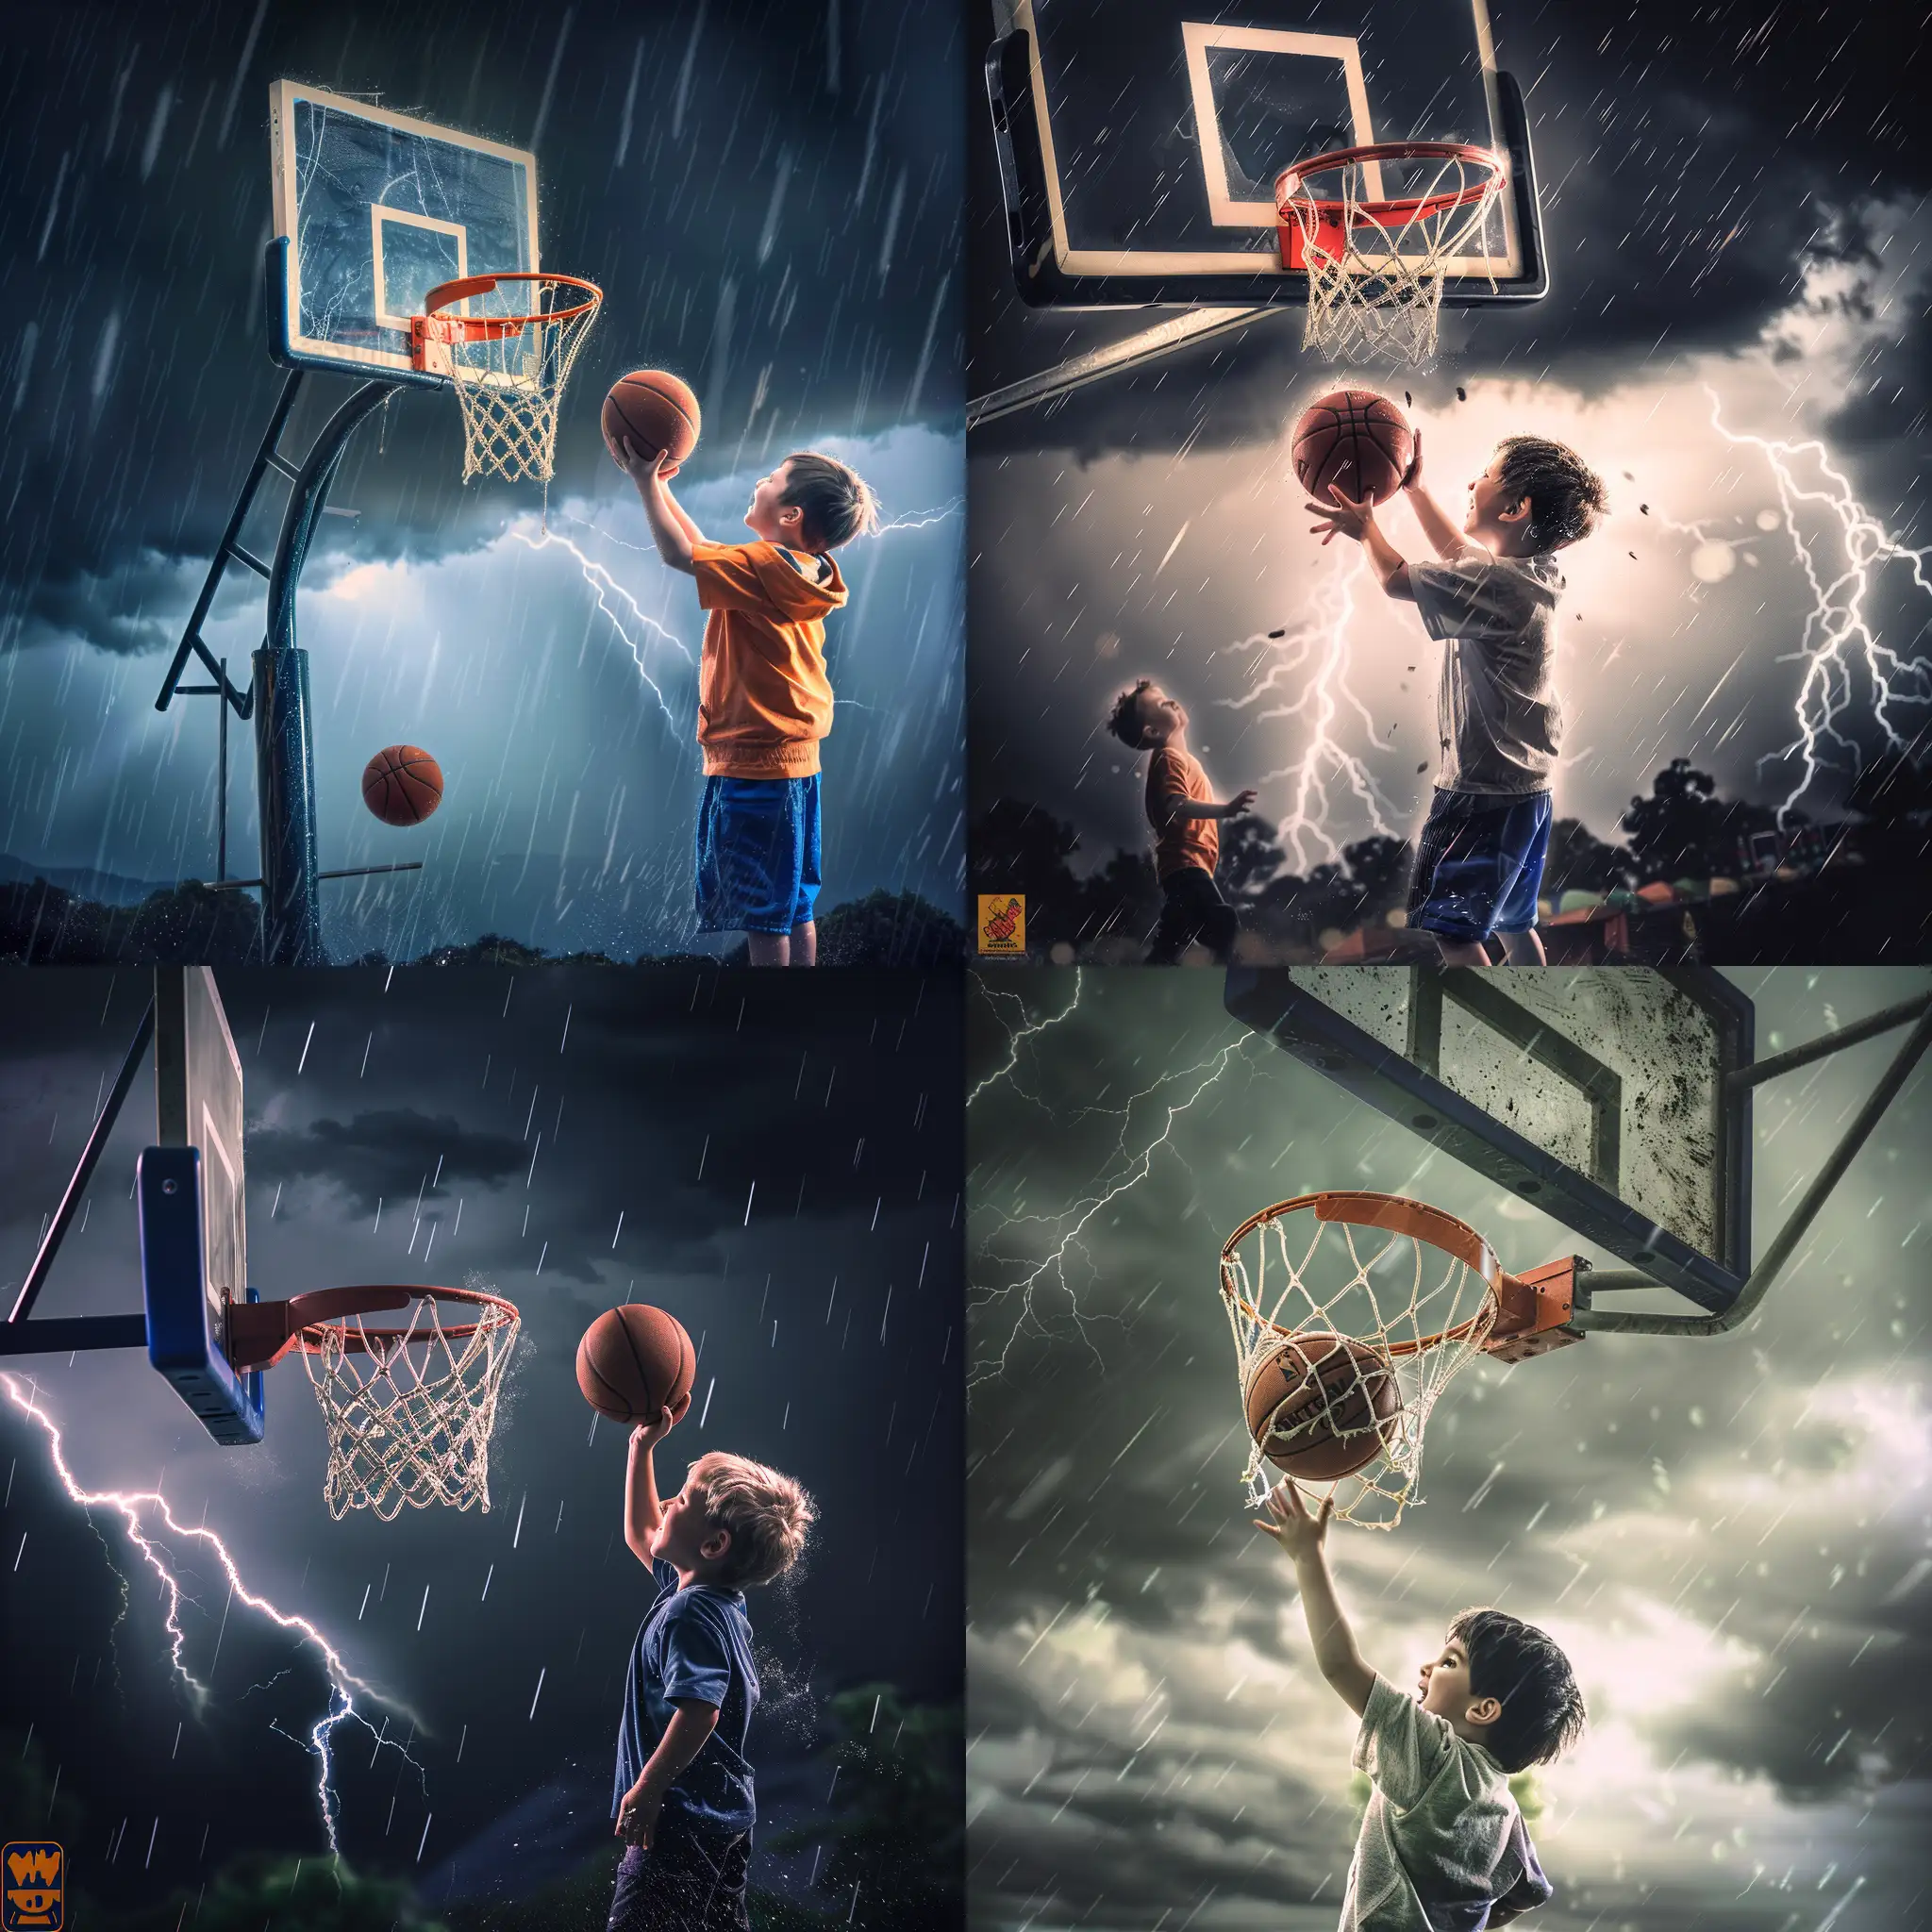 Joyful-Boy-Shooting-Baskets-in-Thunderstorm